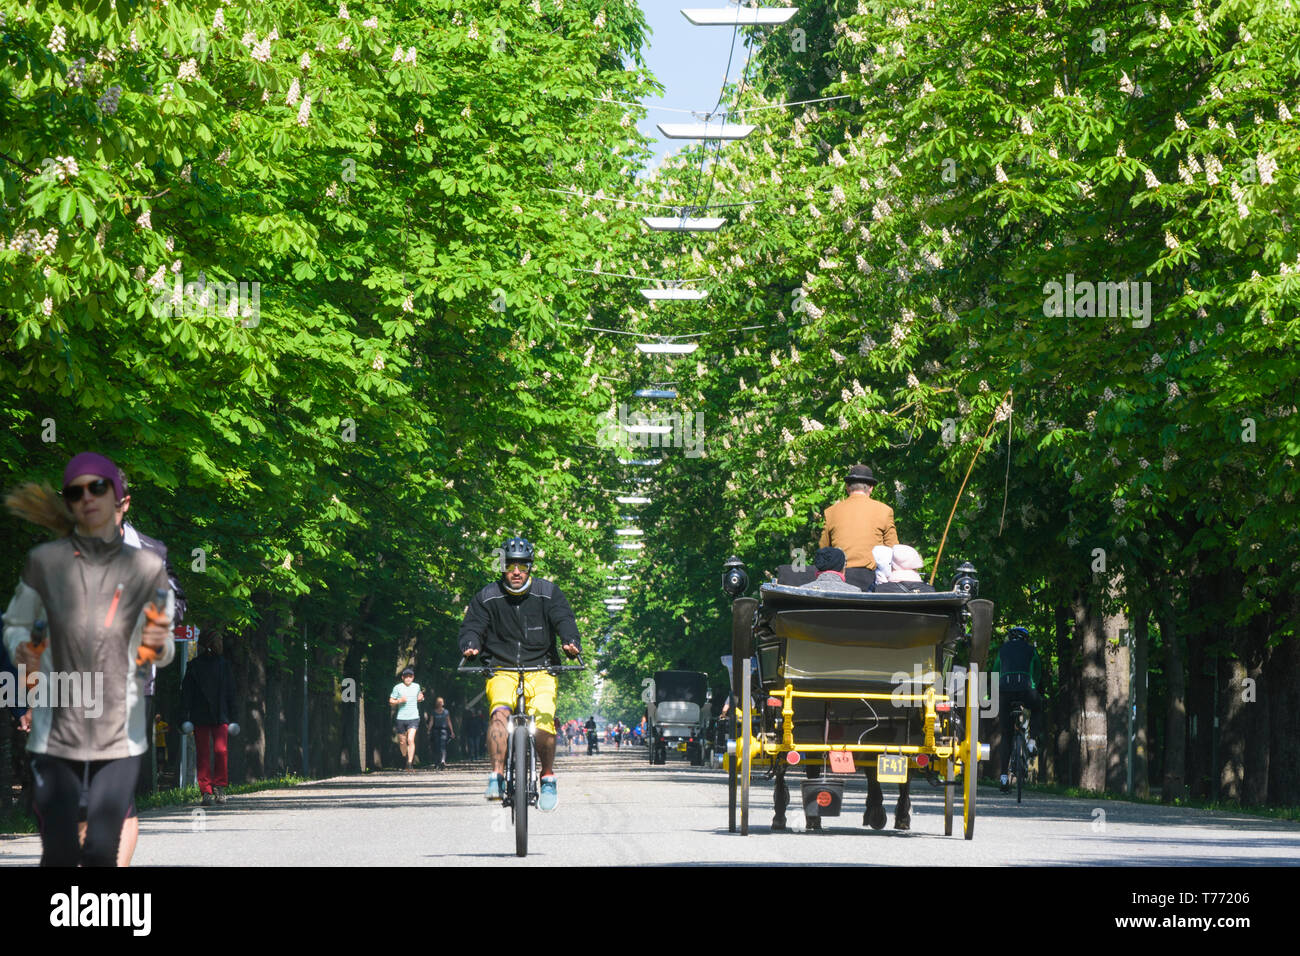 Wien, Vienna: Prater Hauptallee, Prater main avenue, flowering chestnut trees, joggers, cyclists, Fiaker, Fiacre, horse cab in 02. Leopoldstadt, Wien, Stock Photo